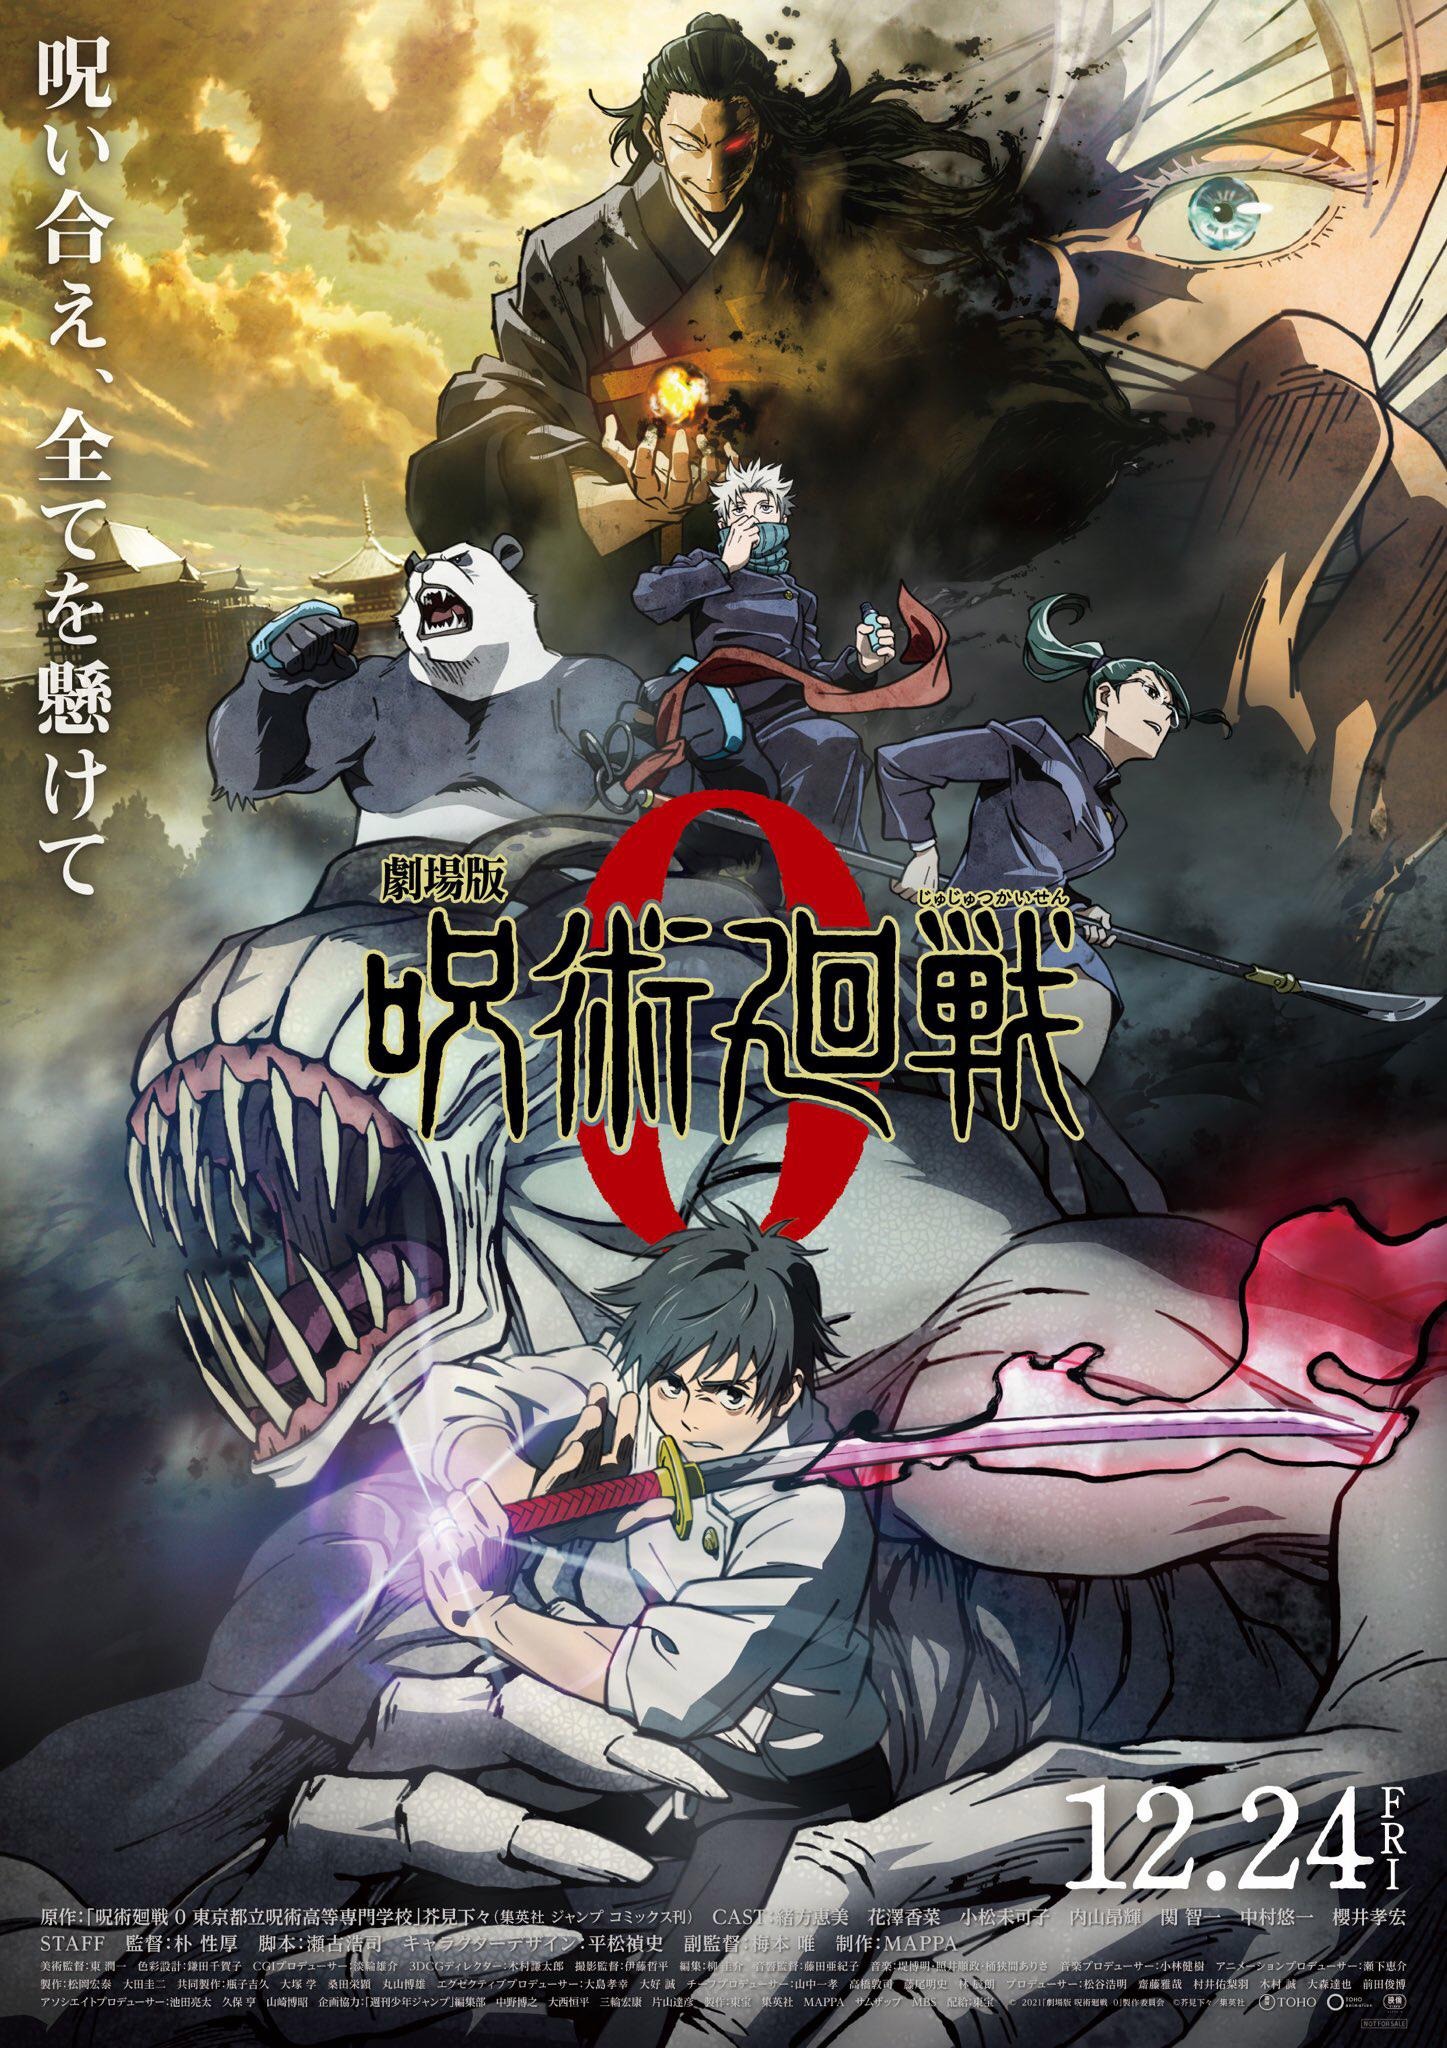 Mega Sized Movie Poster Image for Gekijouban Jujutsu Kaisen 0 